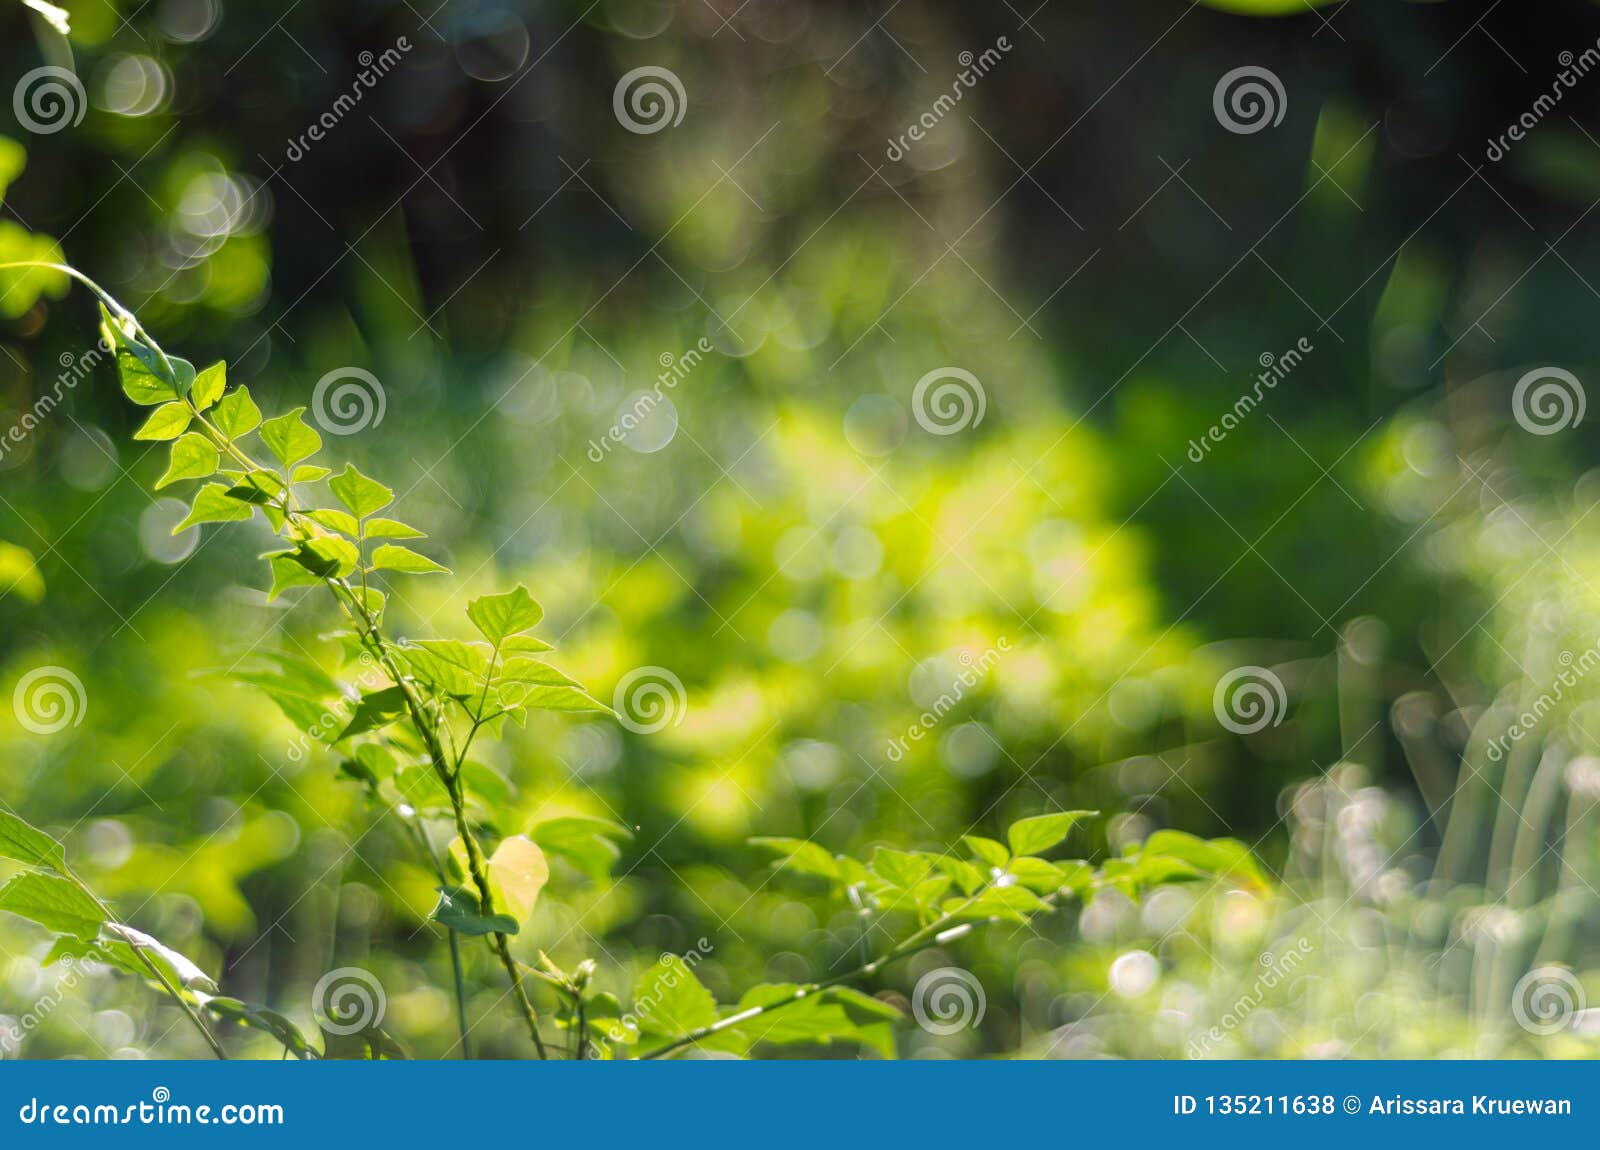 Nature Green Bokeh Sunlight Blur Leaves Background. Stock Photo - Image of  blur, light: 135211638